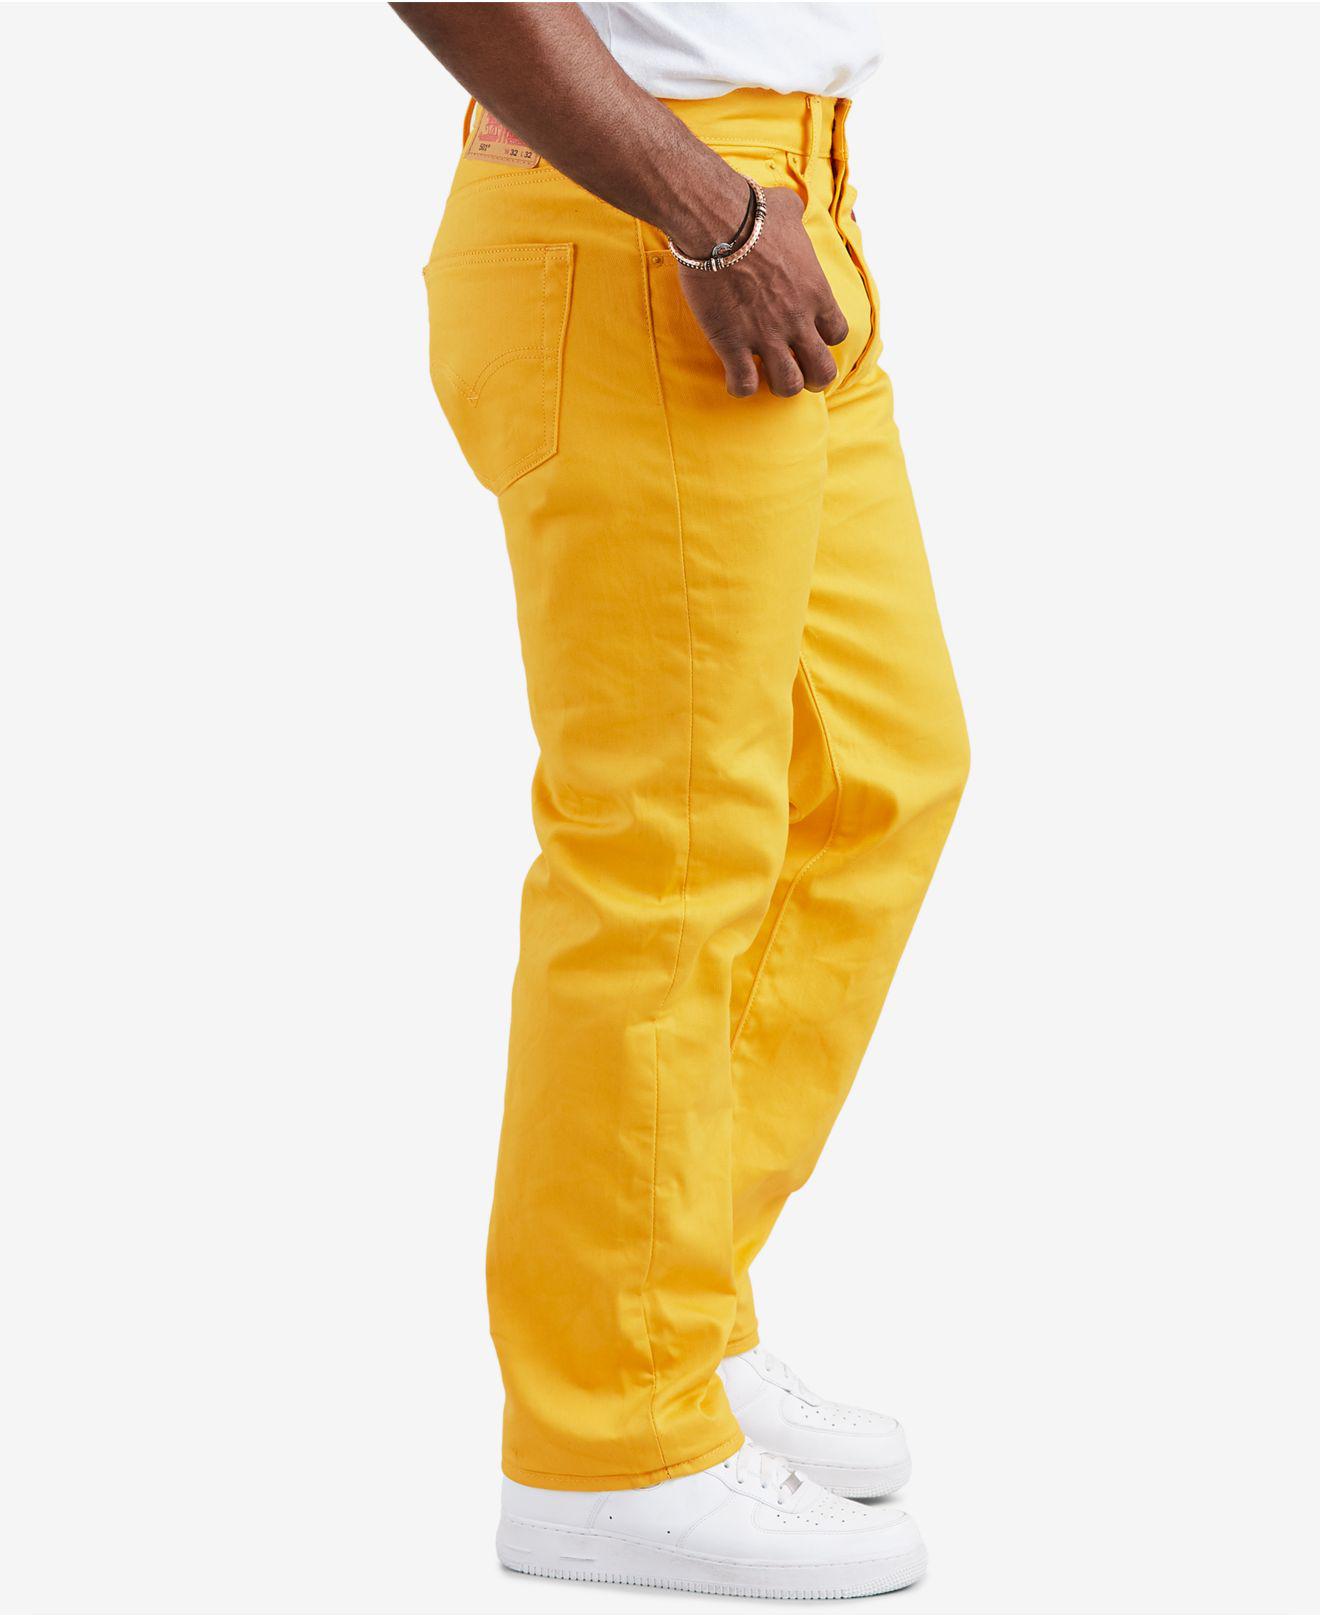 mens yellow levi jeans